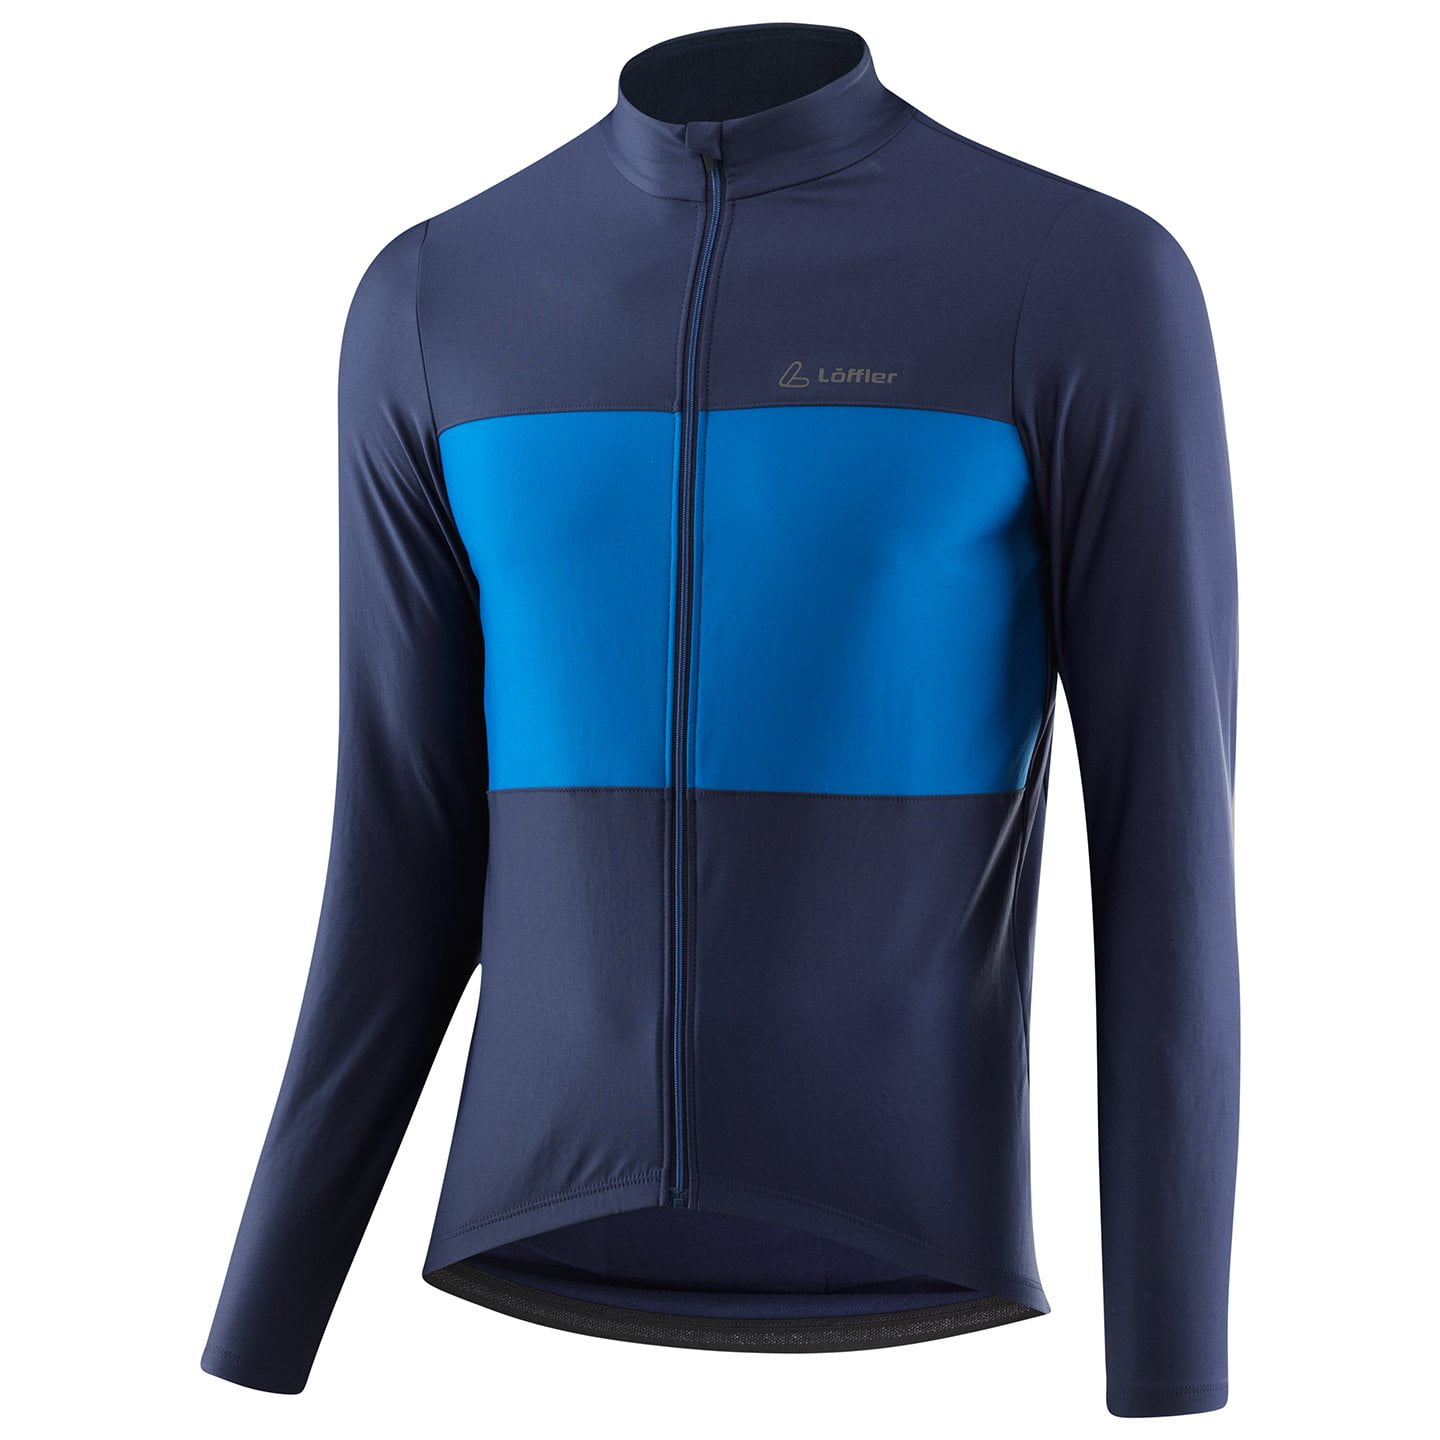 LOFFLER Uni CB Long Sleeve Jersey Long Sleeve Jersey, for men, size S, Cycling jersey, Cycling clothing